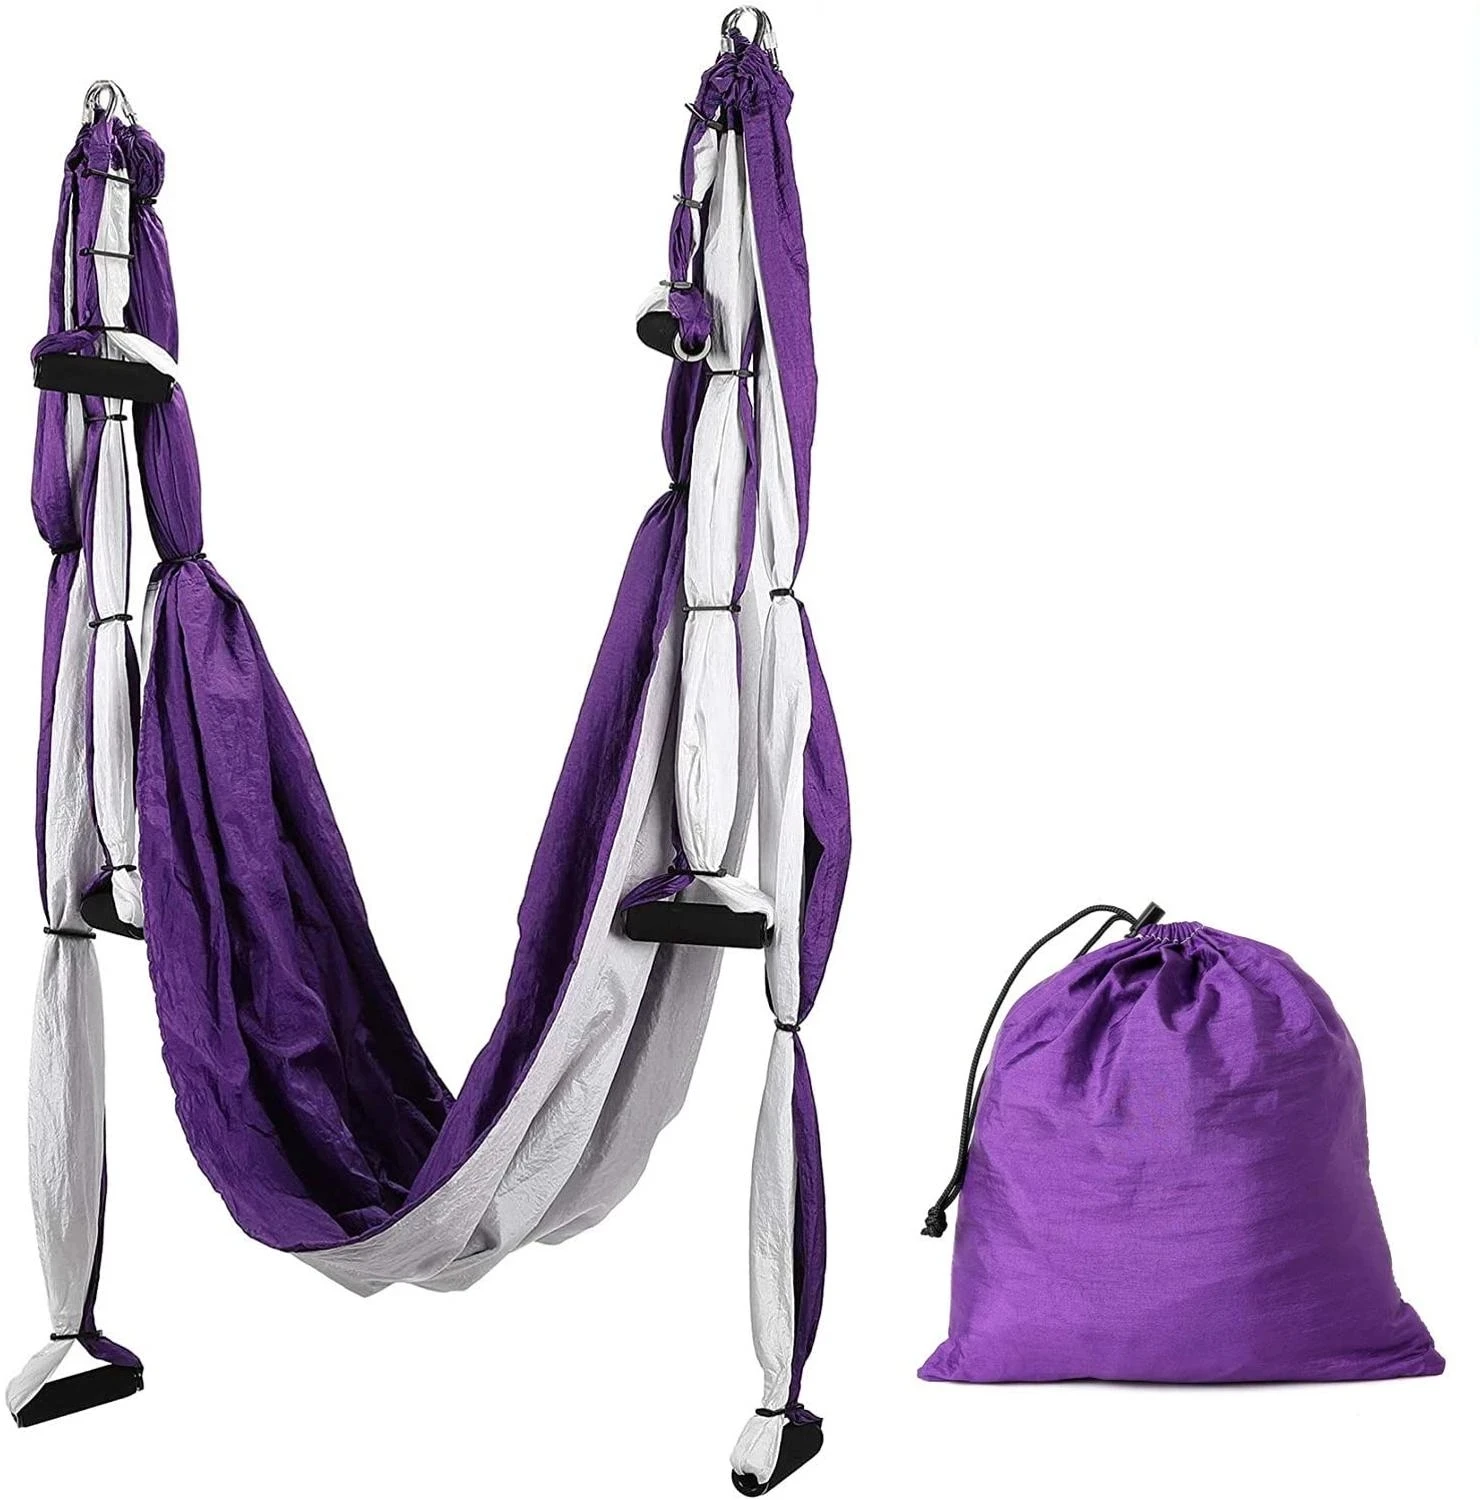 

Yoga Exercises Yoga hammock Aerial Yoga Swing, Rich colors to choose